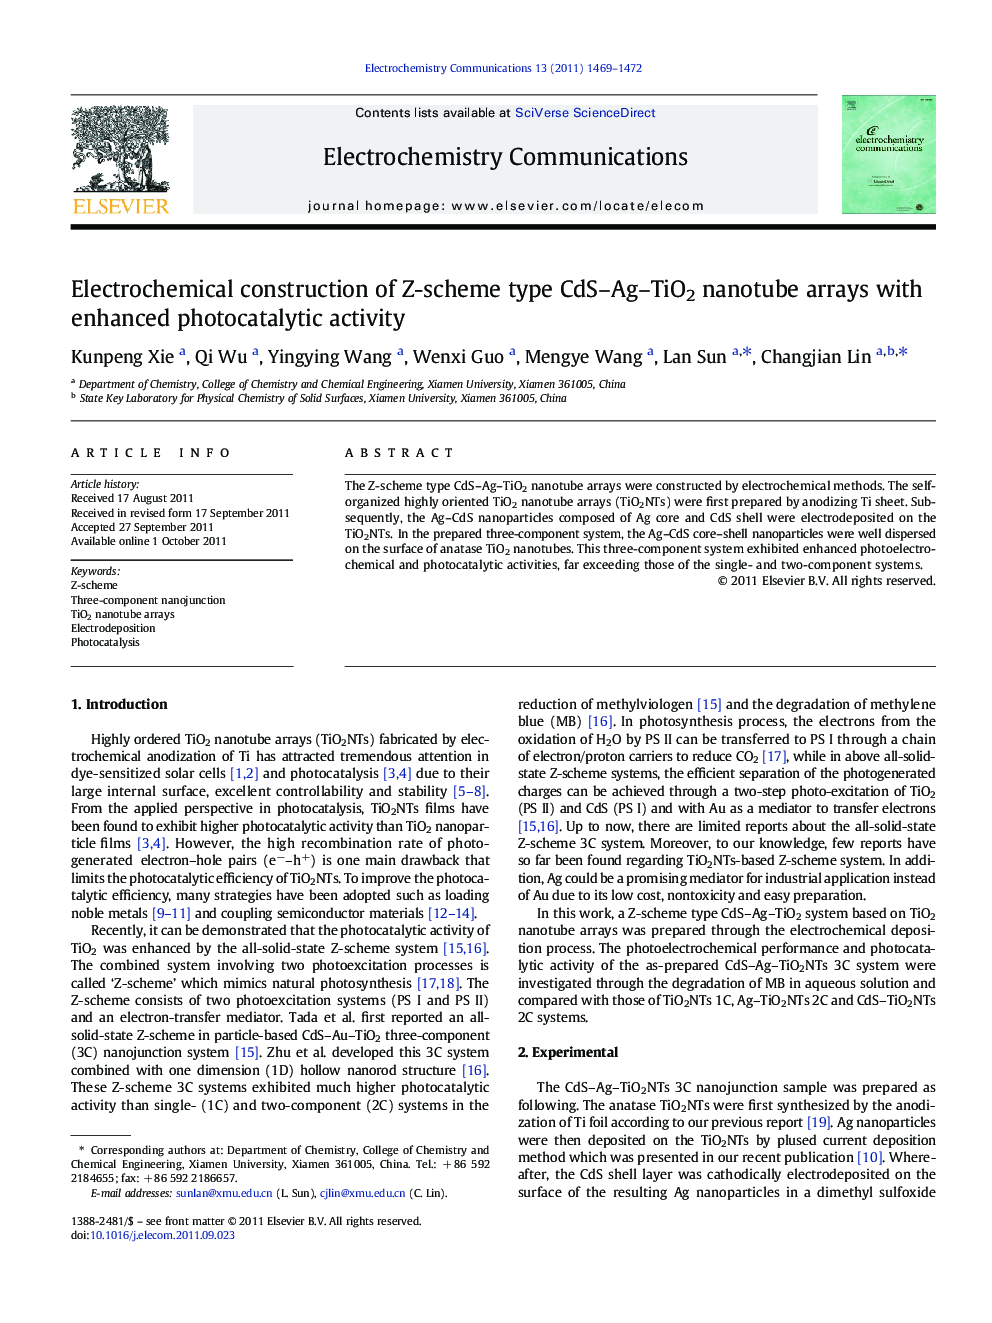 Electrochemical construction of Z-scheme type CdS–Ag–TiO2 nanotube arrays with enhanced photocatalytic activity